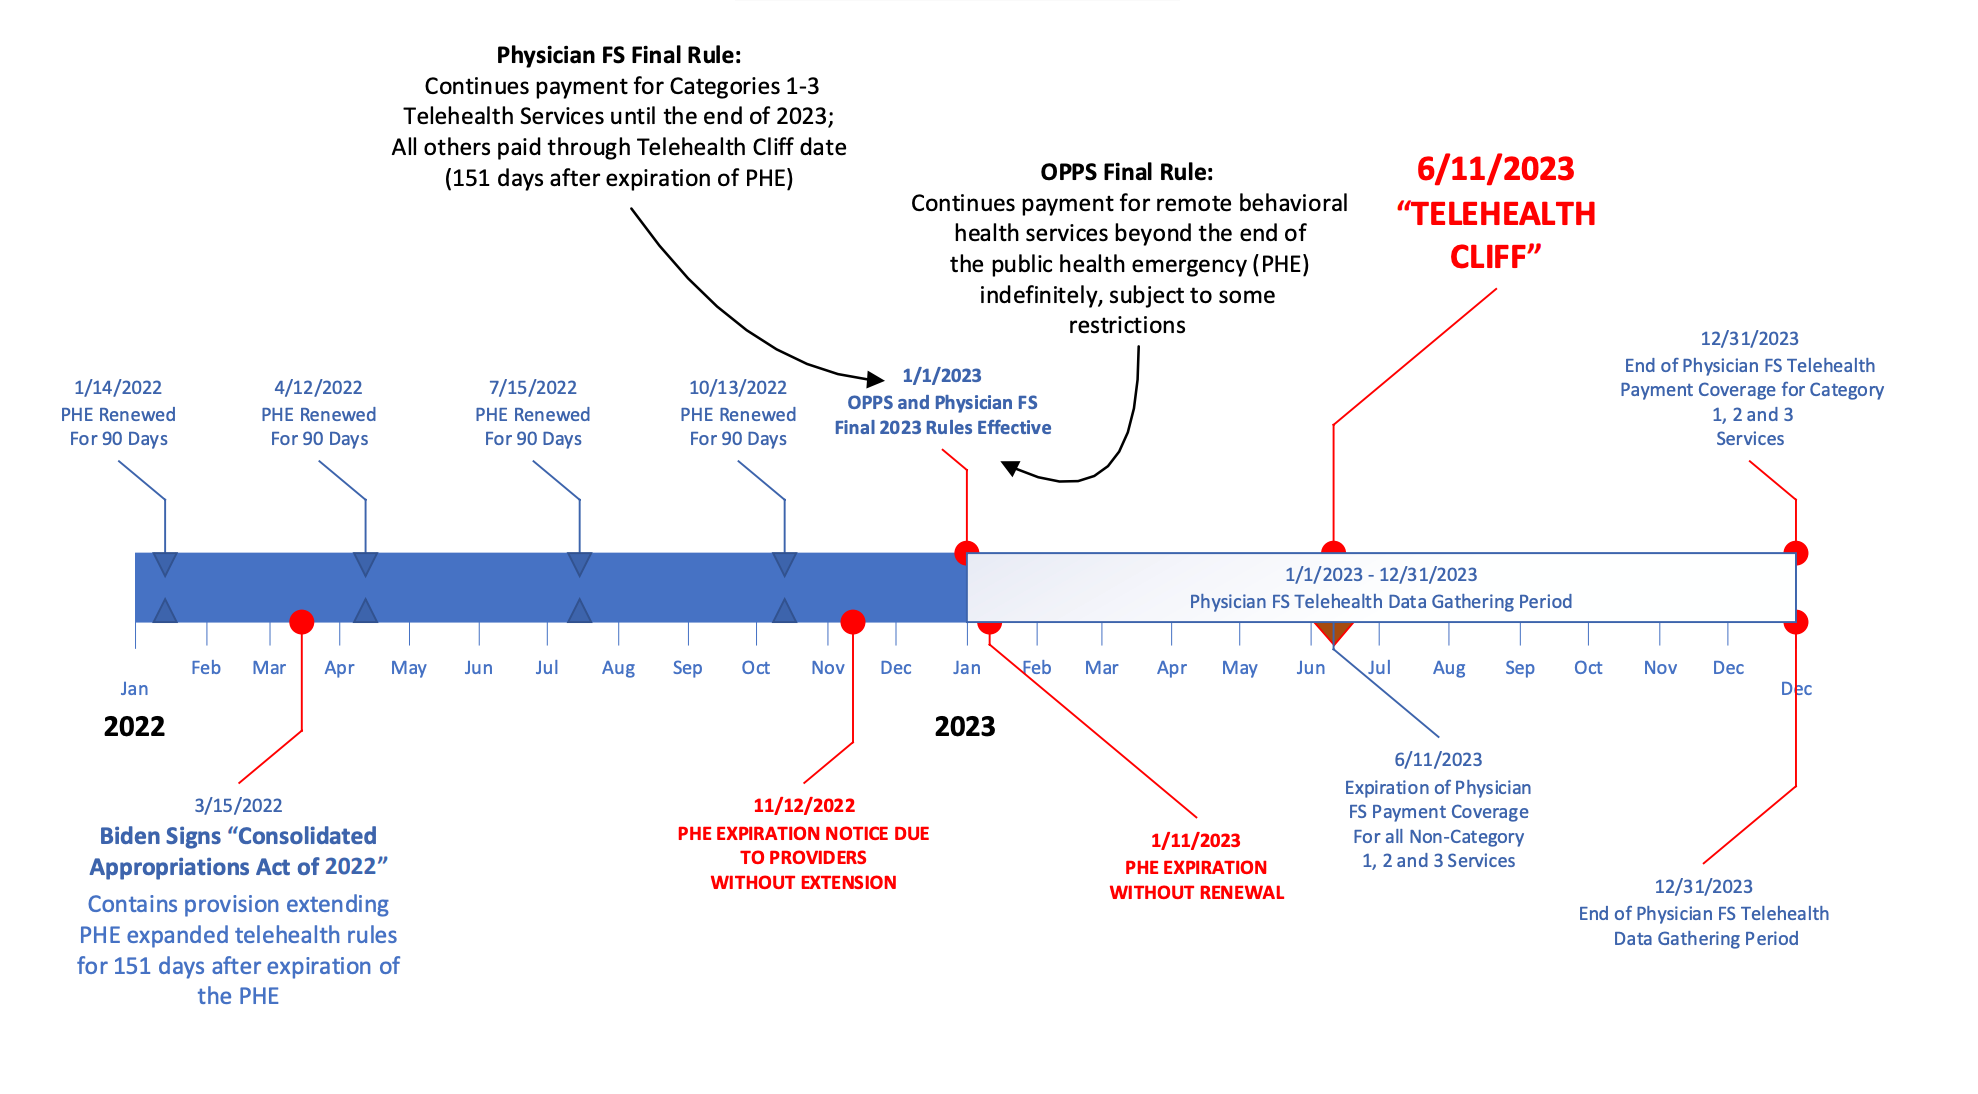 Telehealth Cliff Timeline